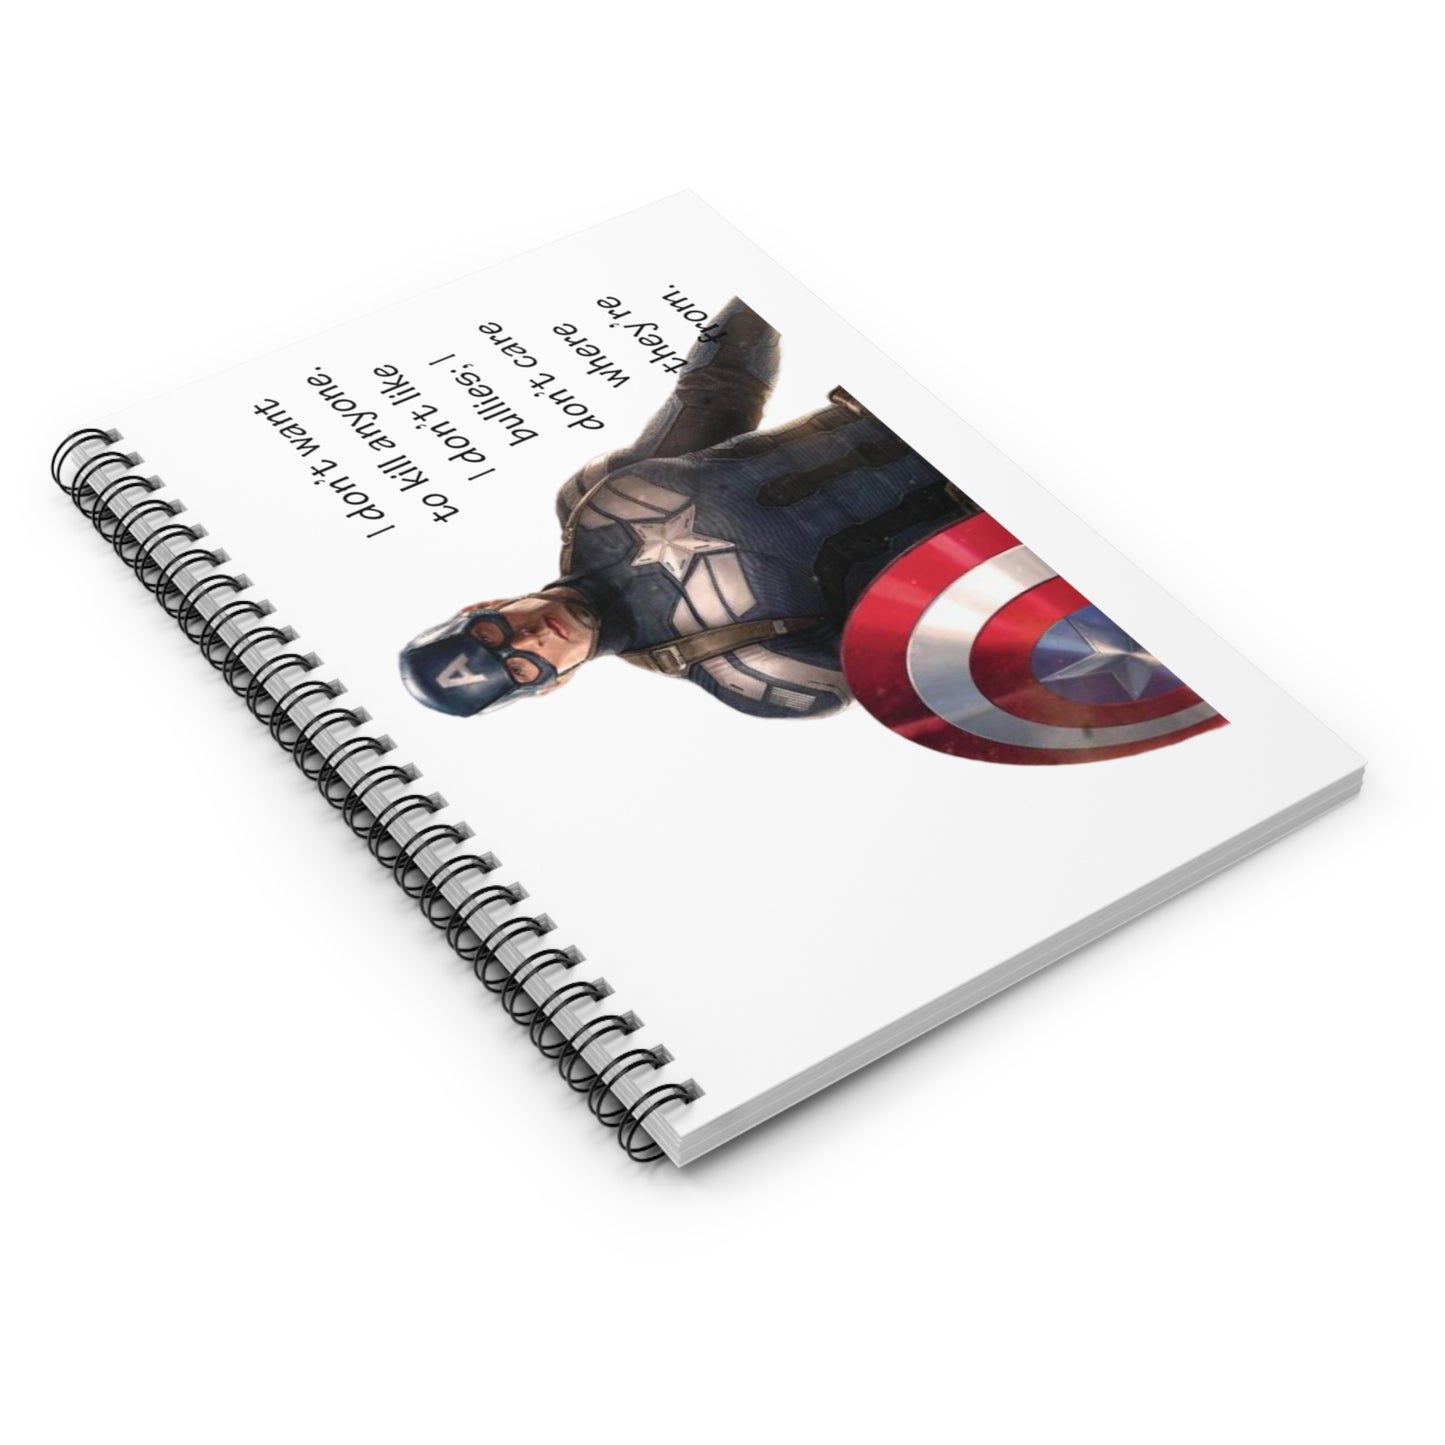 Captain Amerika Spiral Notebook - Ruled Line